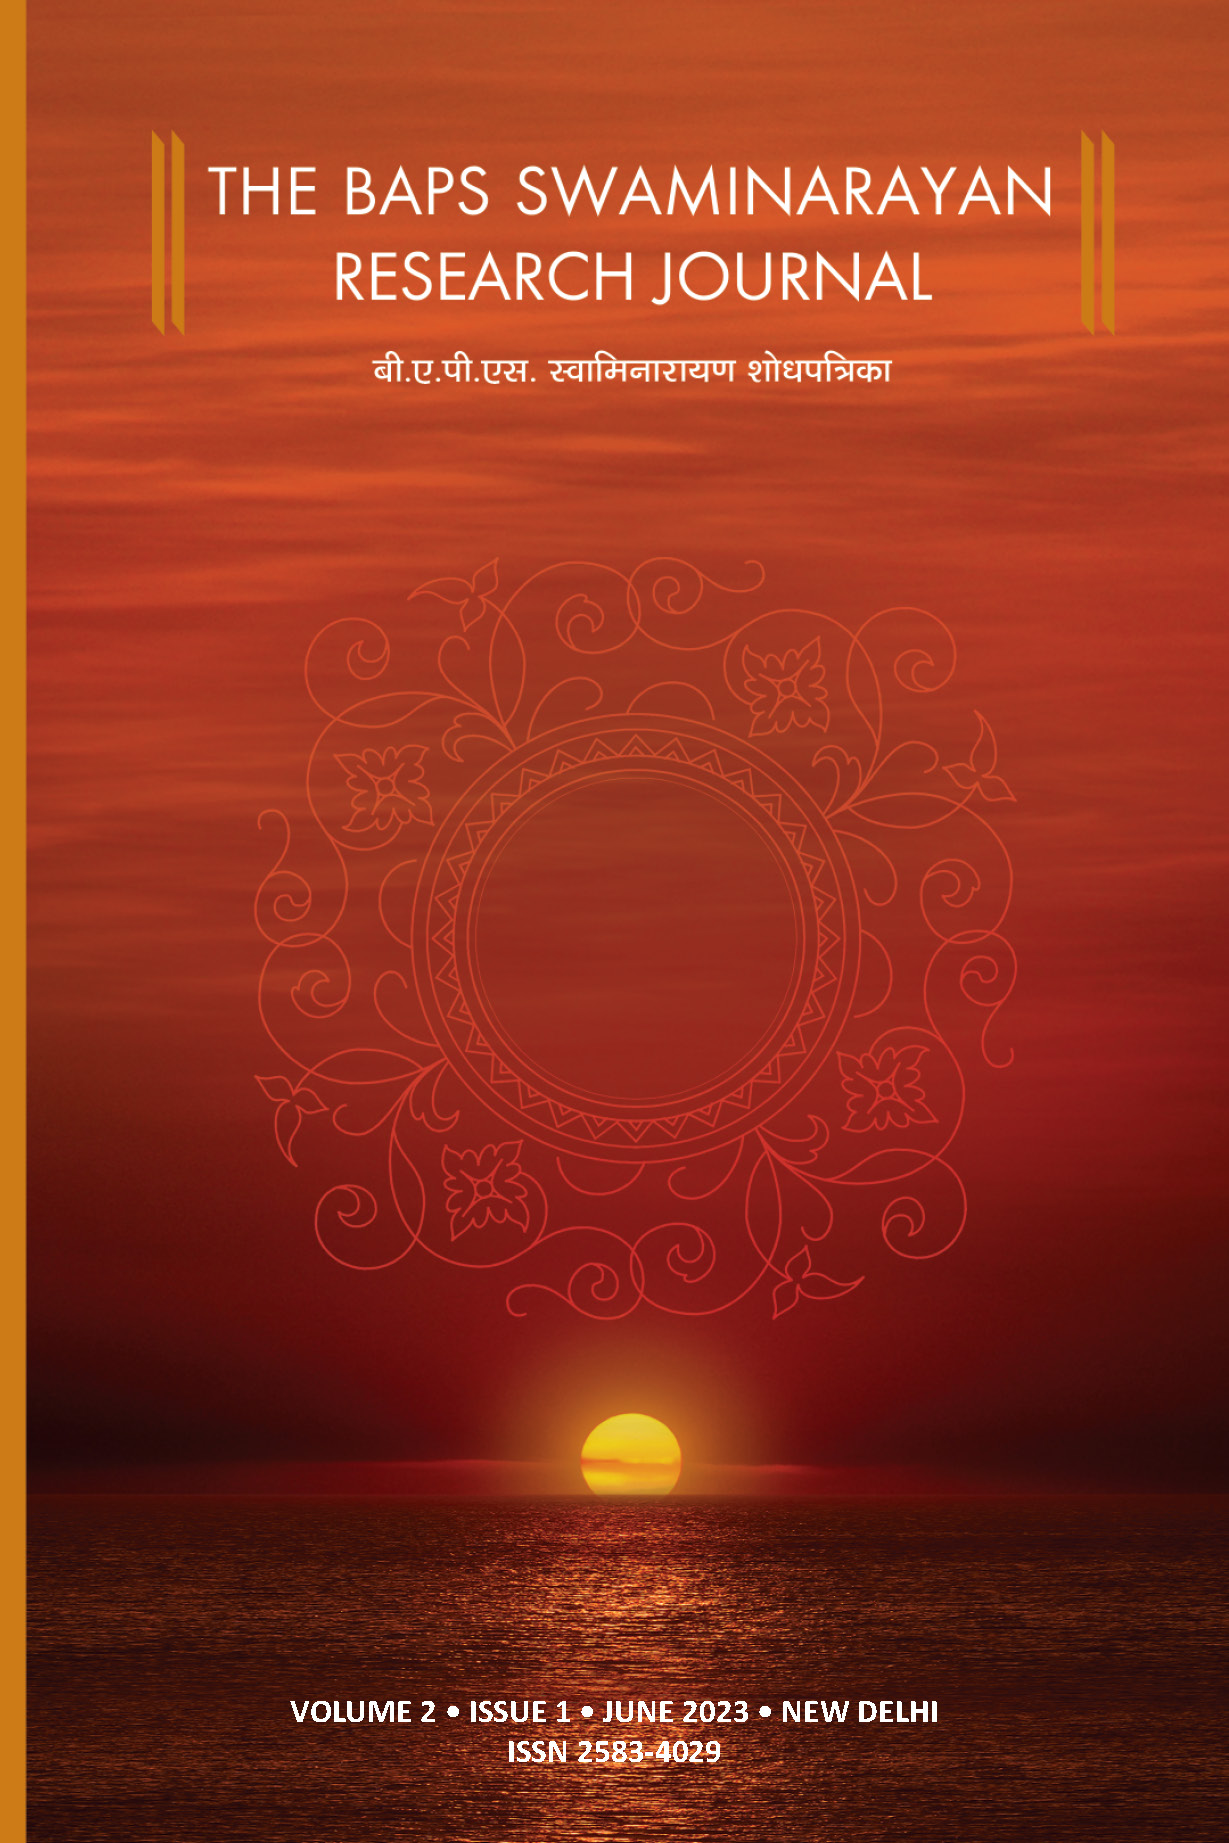 The BAPS Swaminarayan Research Journal